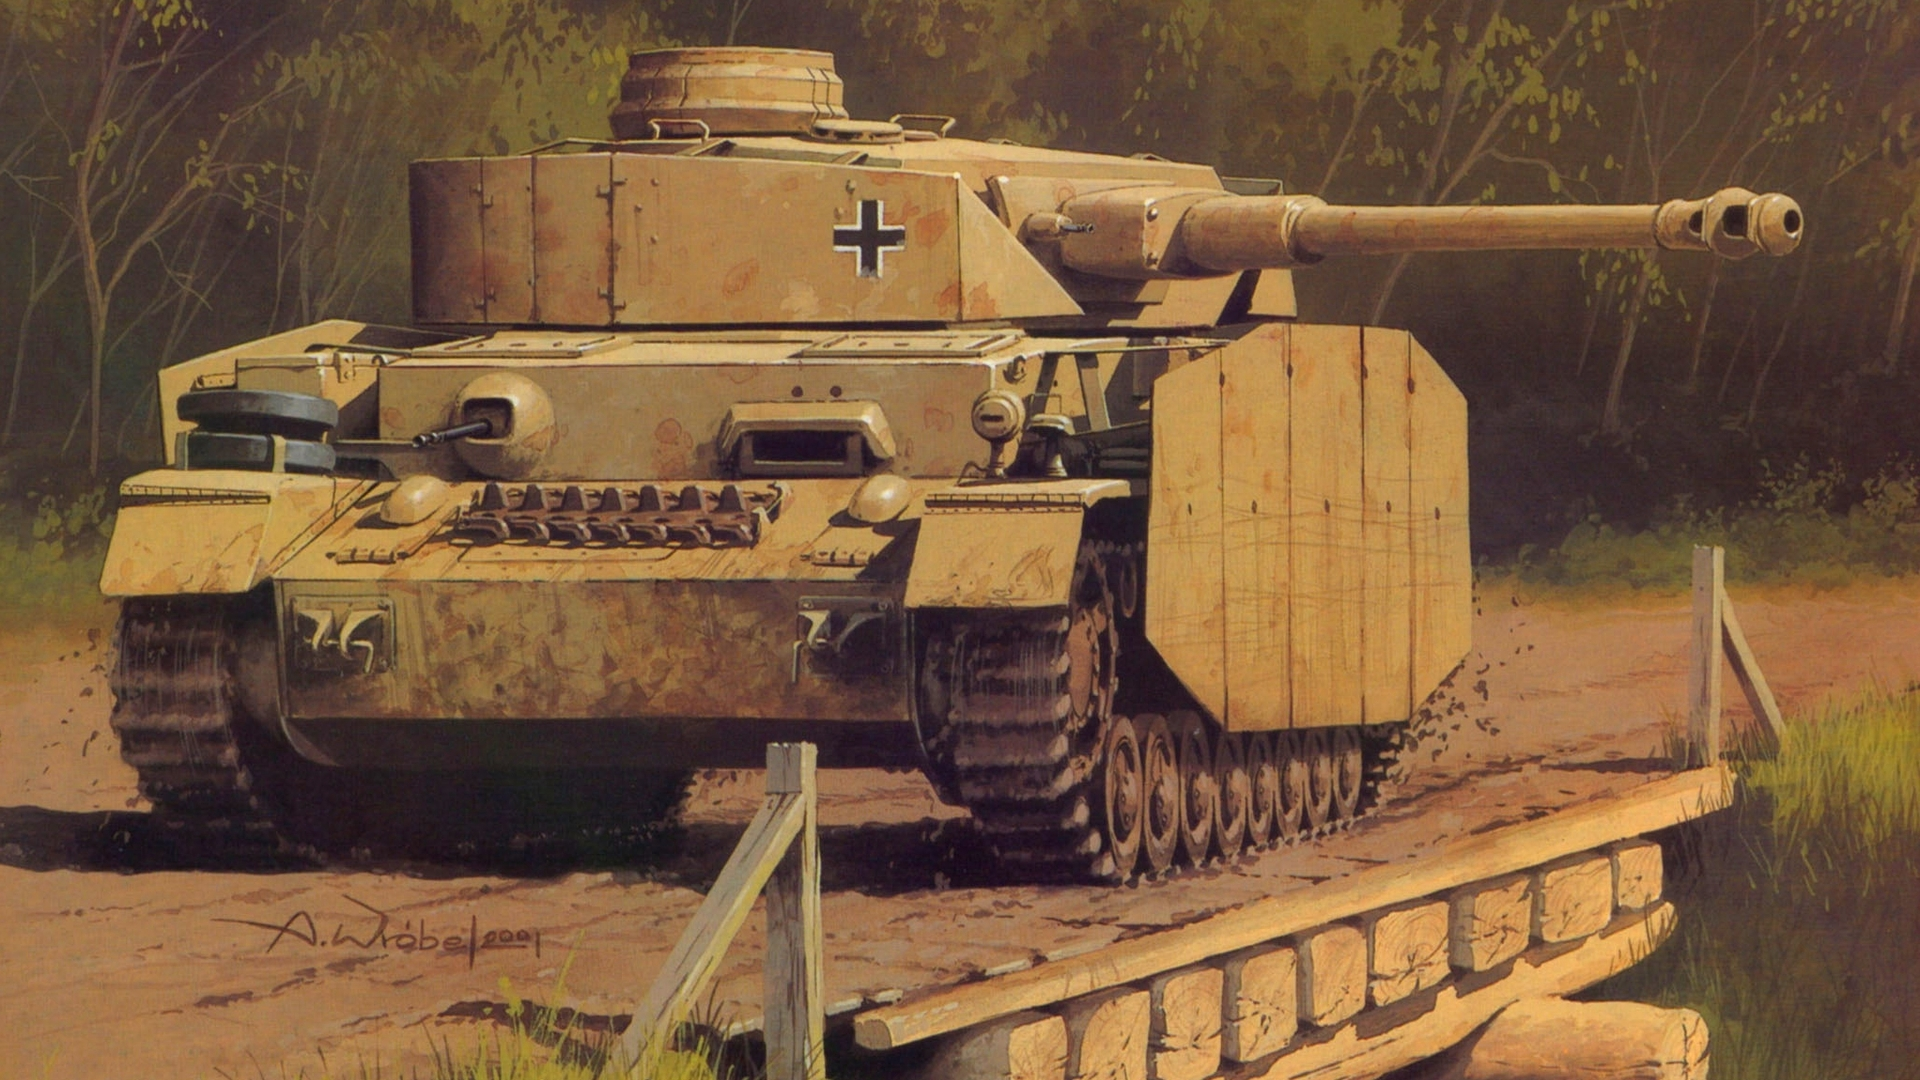 Panzer IV World War Ii Digital Art Tank Military Watermarked Artwork Military Vehicle Signature Fron 1920x1080